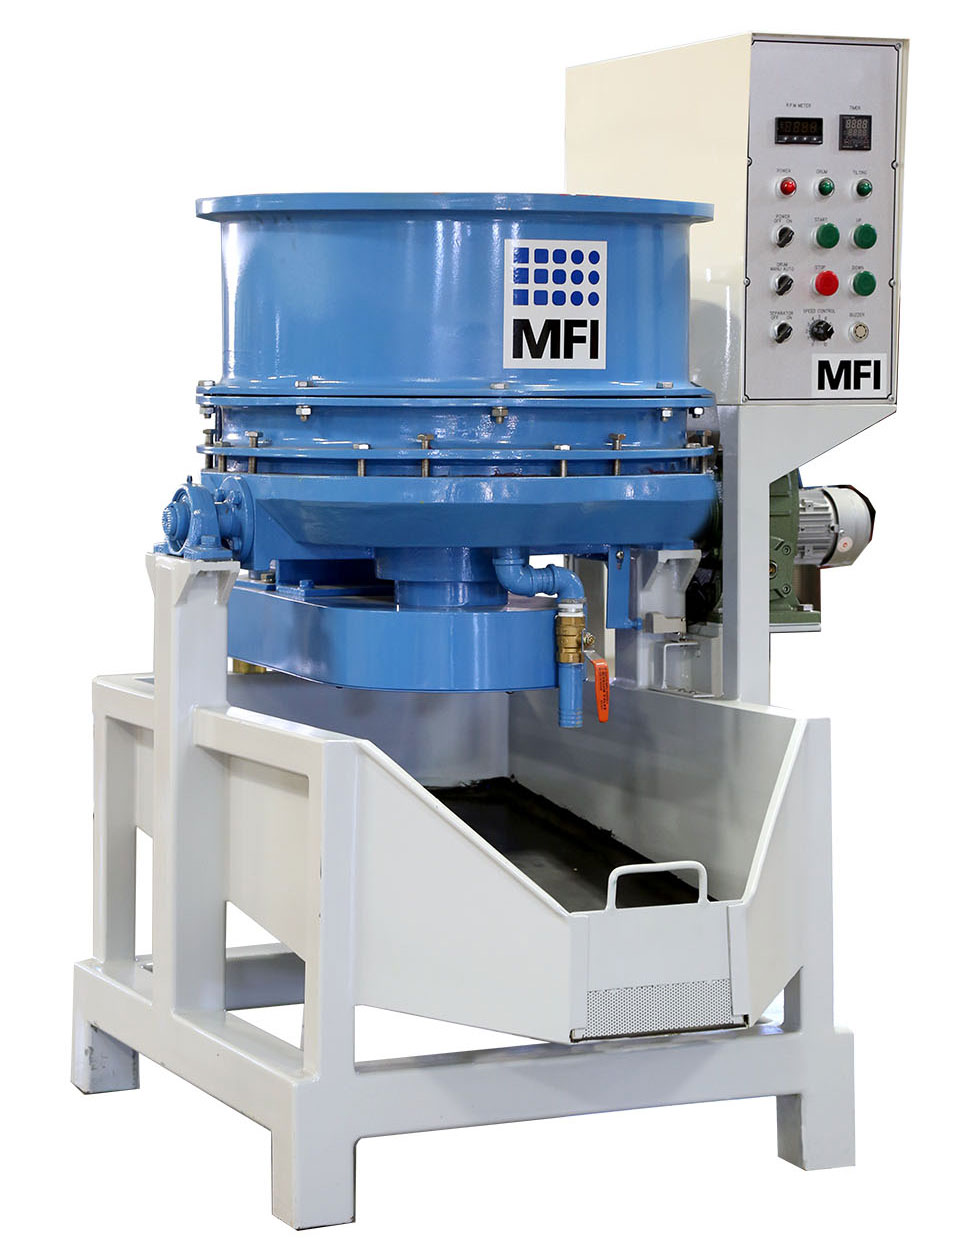 MFI RF 100 machine ready for use